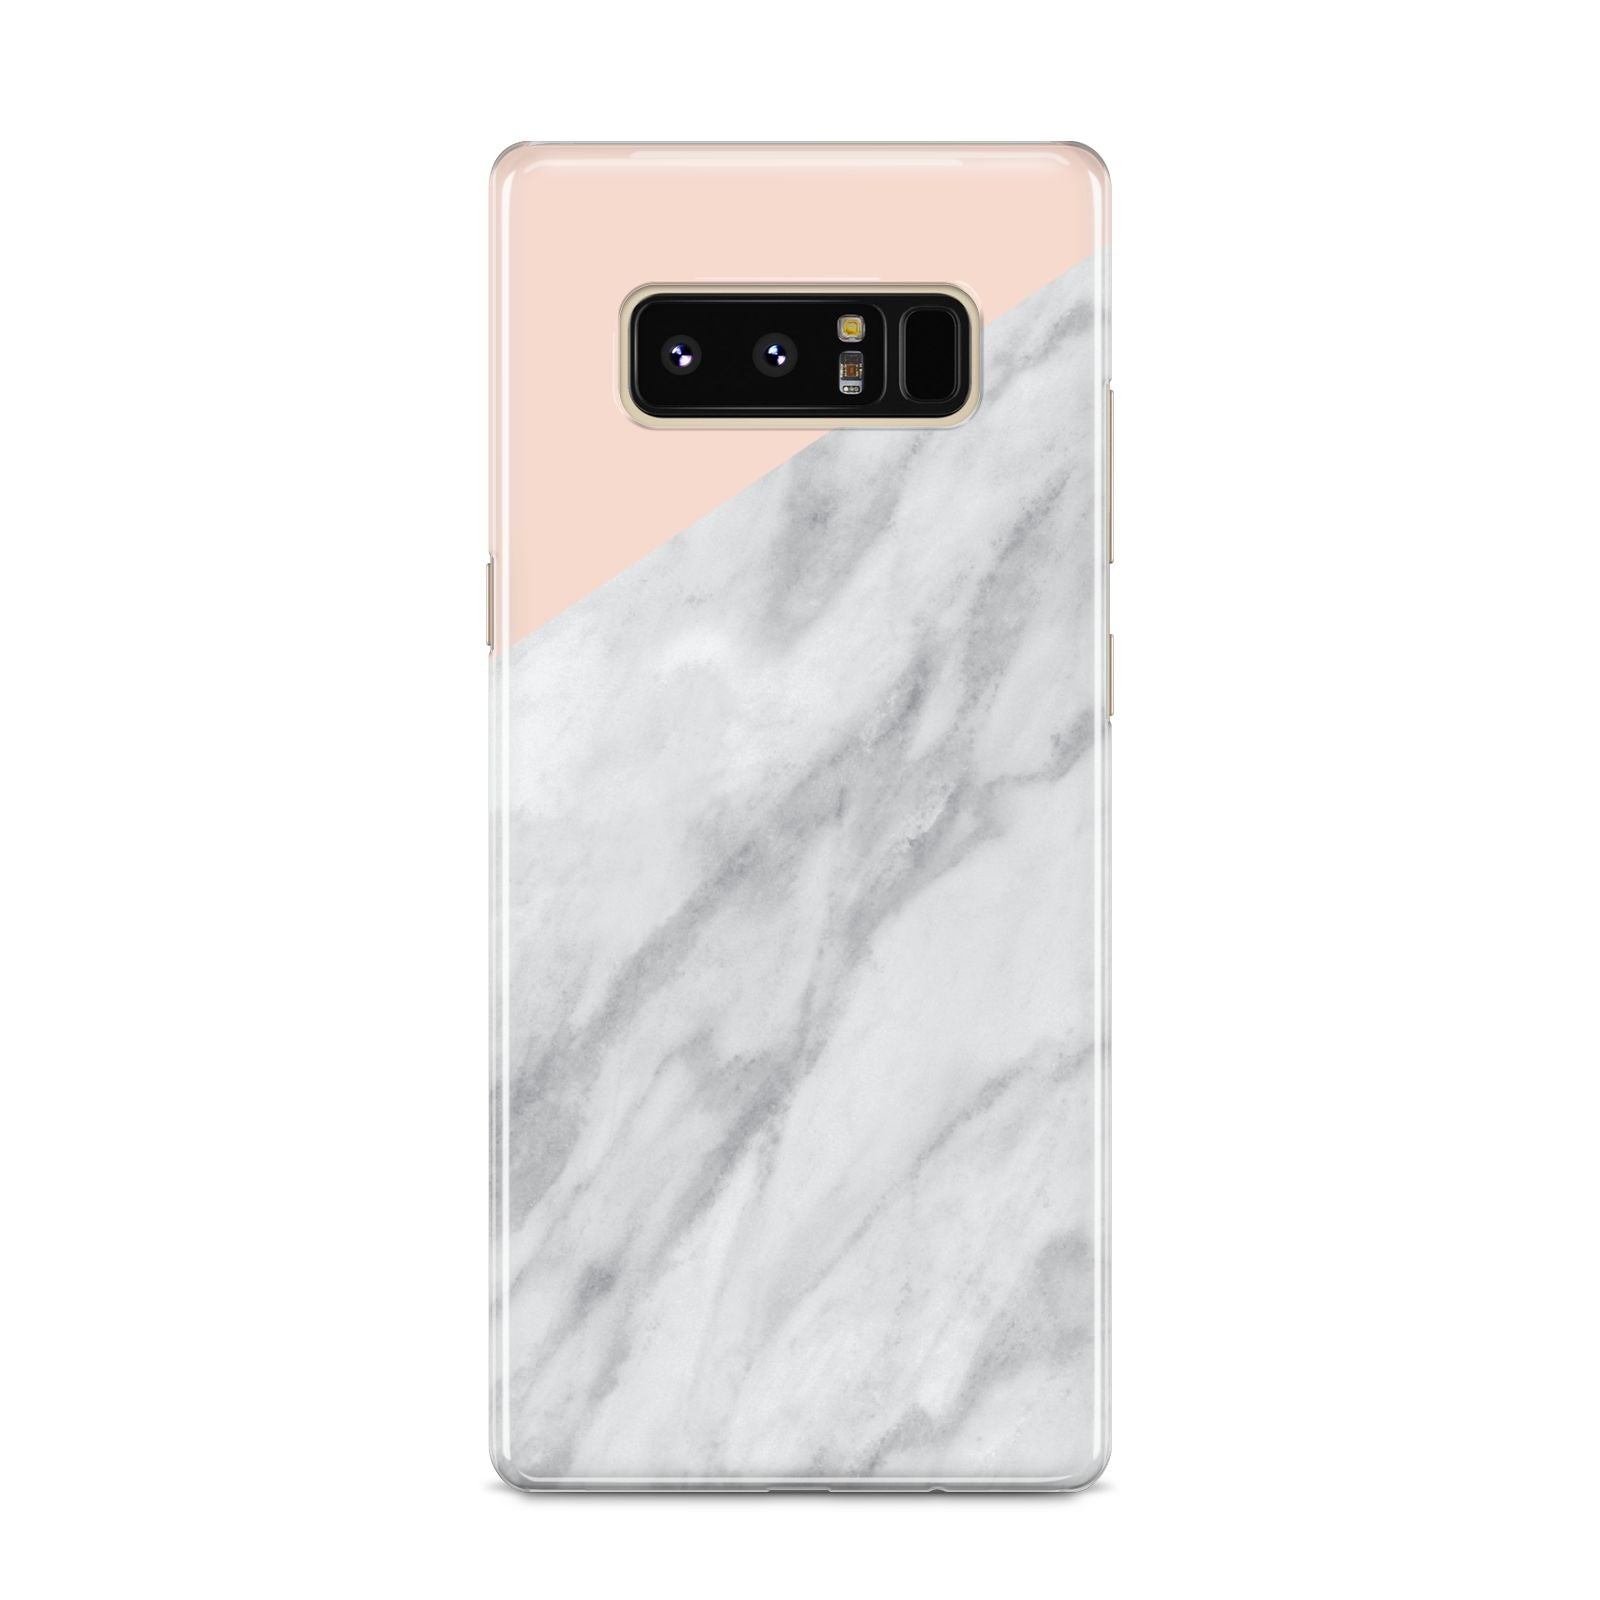 Marble Pink White Grey Samsung Galaxy S8 Case